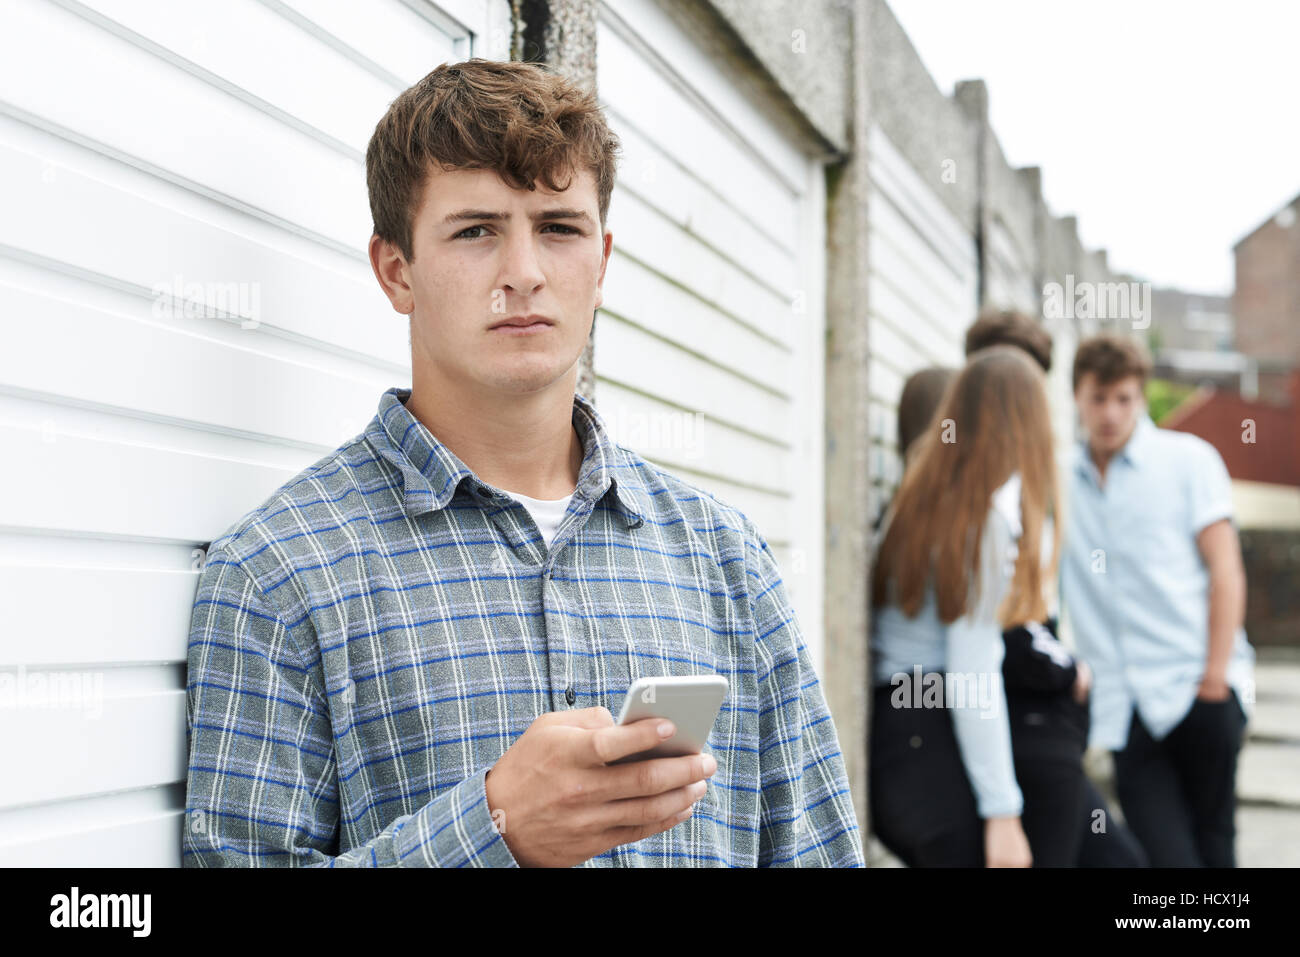 Teenage Boy Using Mobile Phone In Urban Setting Stock Photo